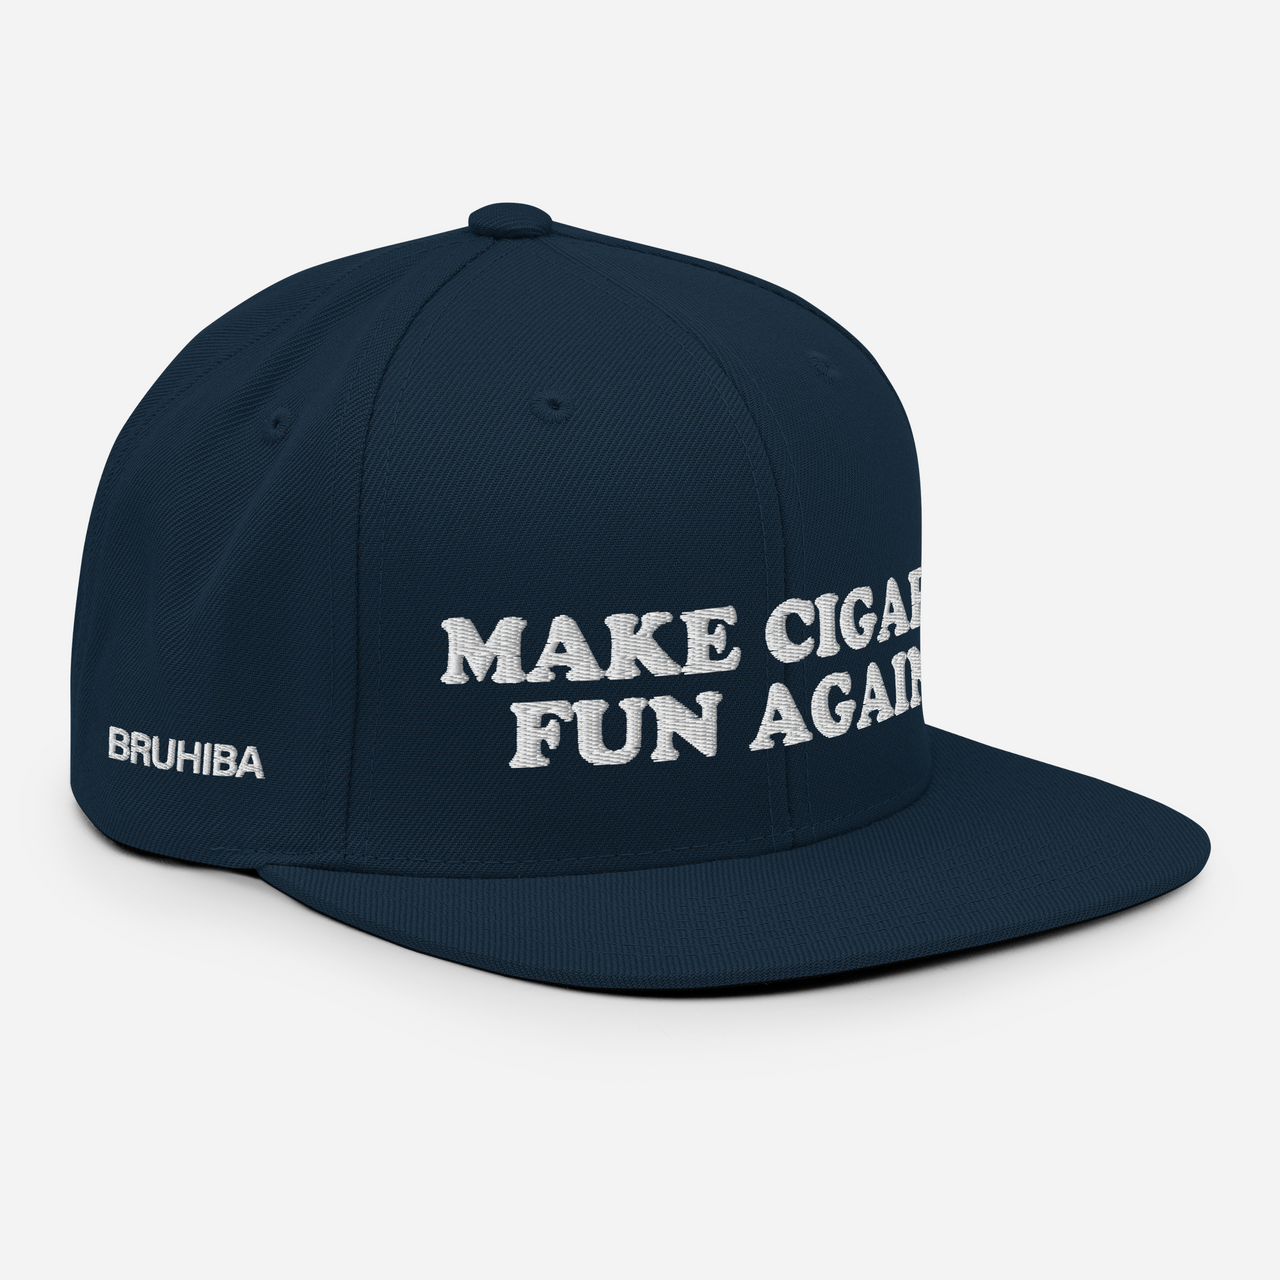 BRUHIBA "Make Cigars Fun Again" Official Hat